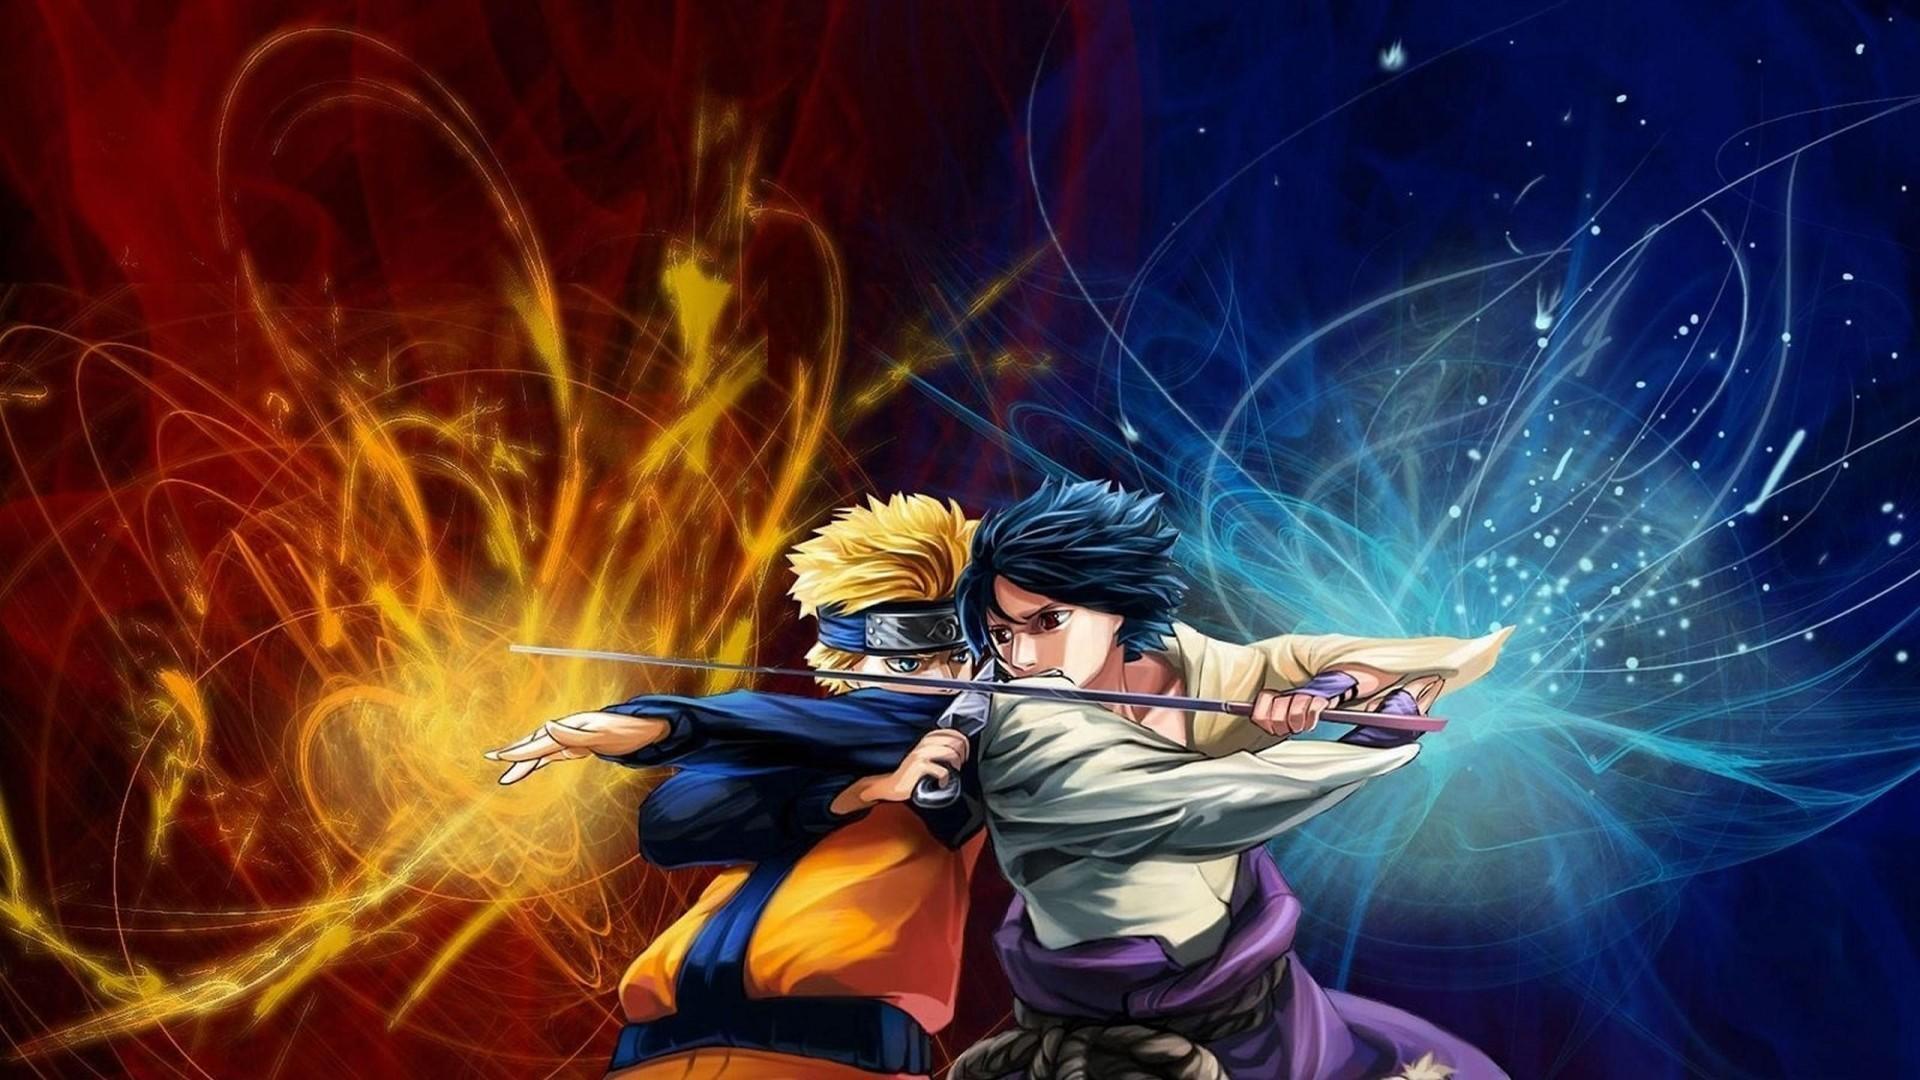 Naruto Vs Sasuke Wallpaper For Your